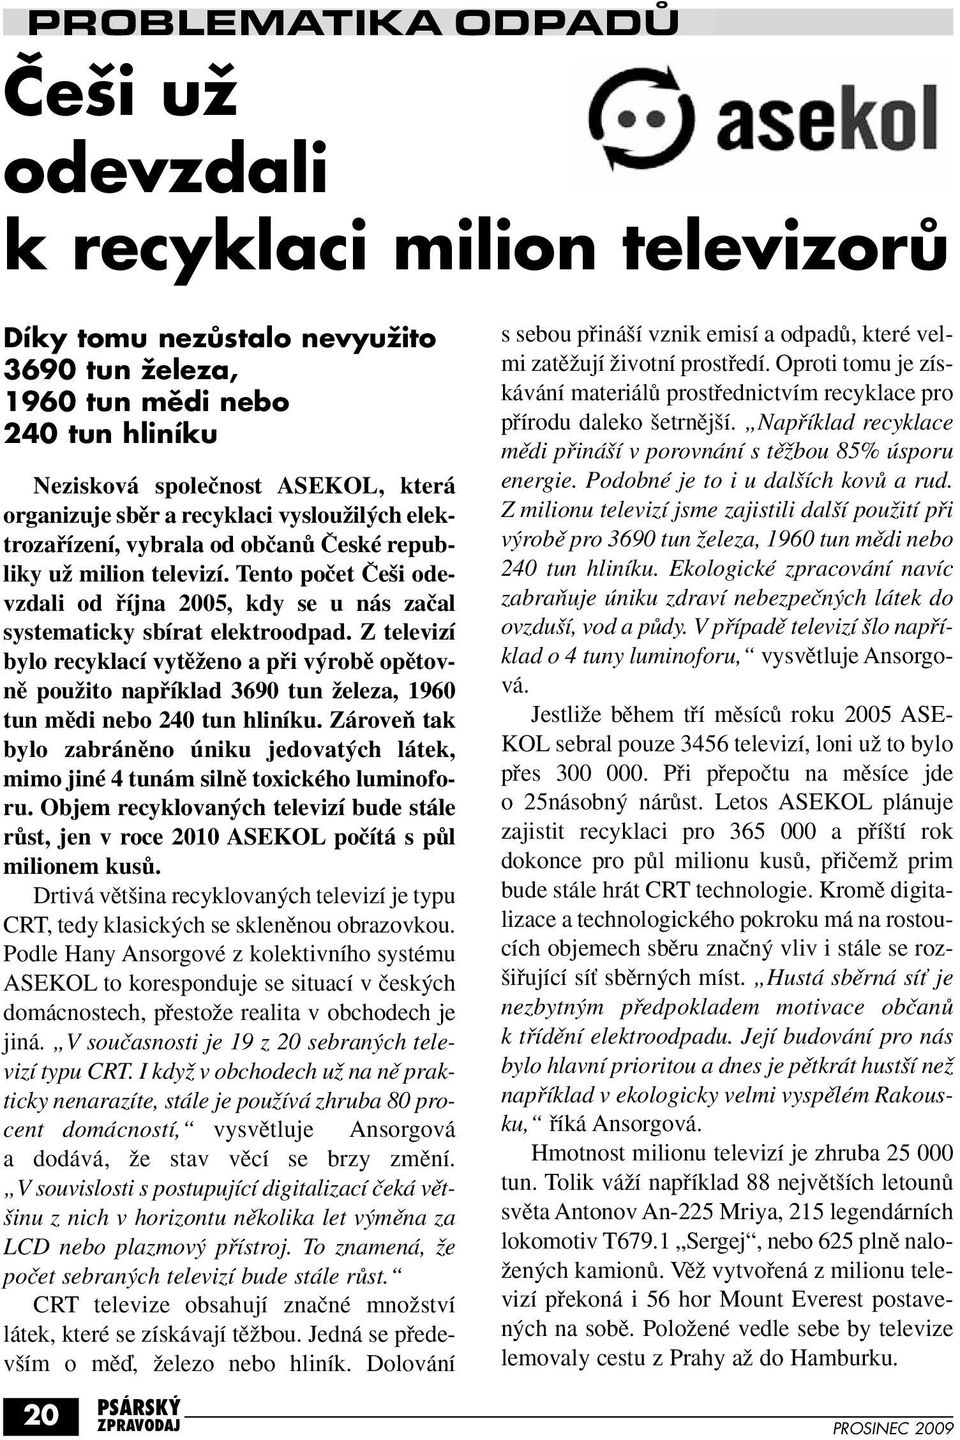 Z televizí bylo recyklací vytûïeno a pfii v robû opûtovnû pouïito napfiíklad 3690 tun Ïeleza, 1960 tun mûdi nebo 240 tun hliníku.